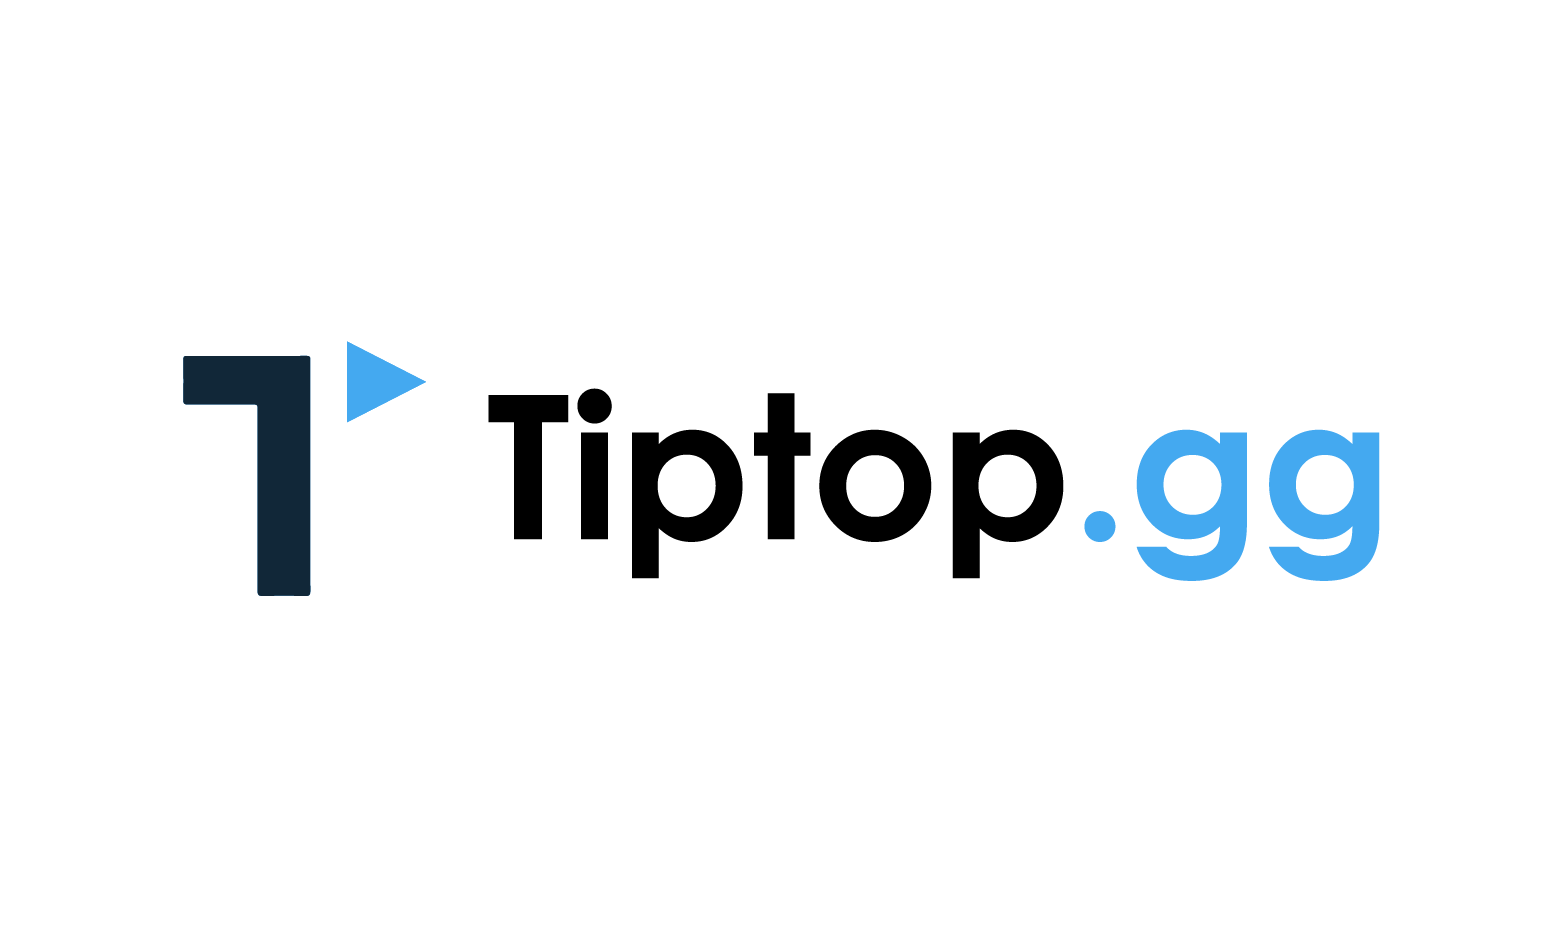 Tiptop.gg - Creative brandable domain for sale